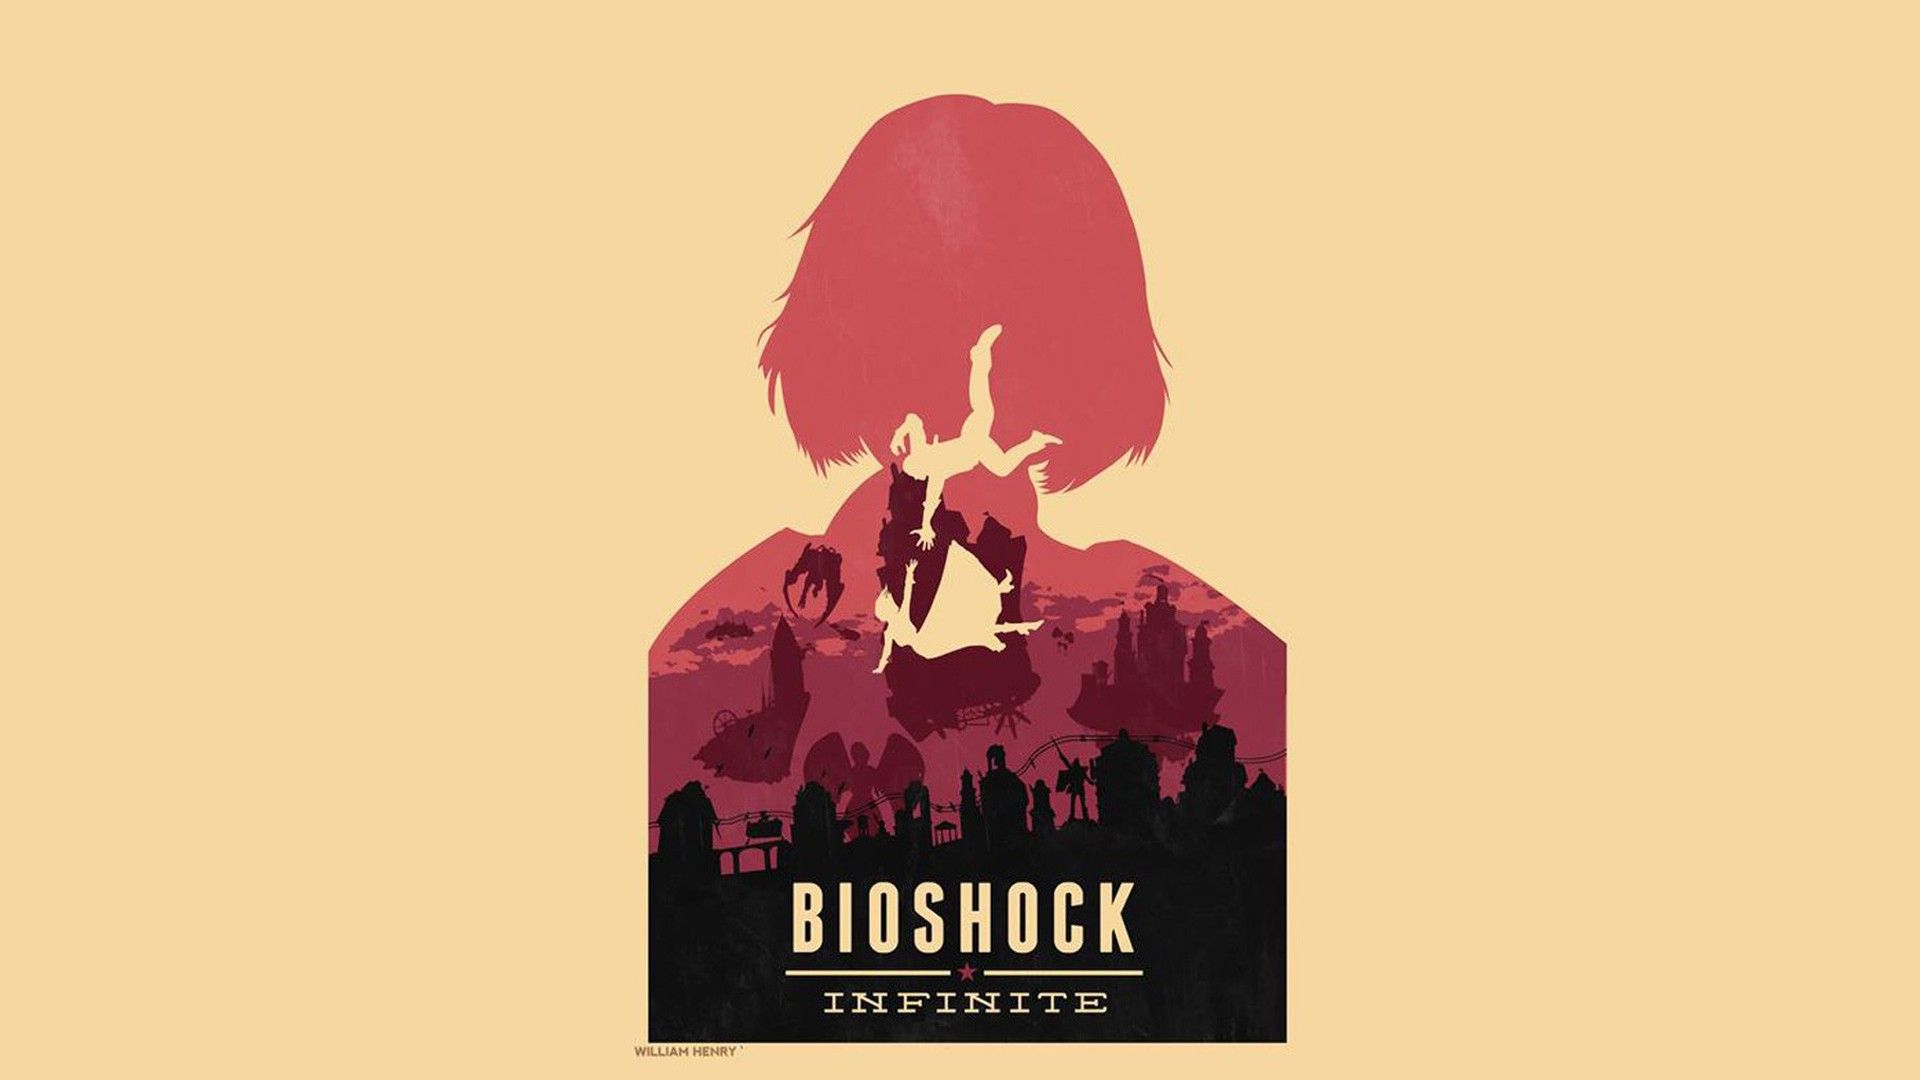 Bioshock Infinite Wallpaper Full HD H1qv2yx 4usky